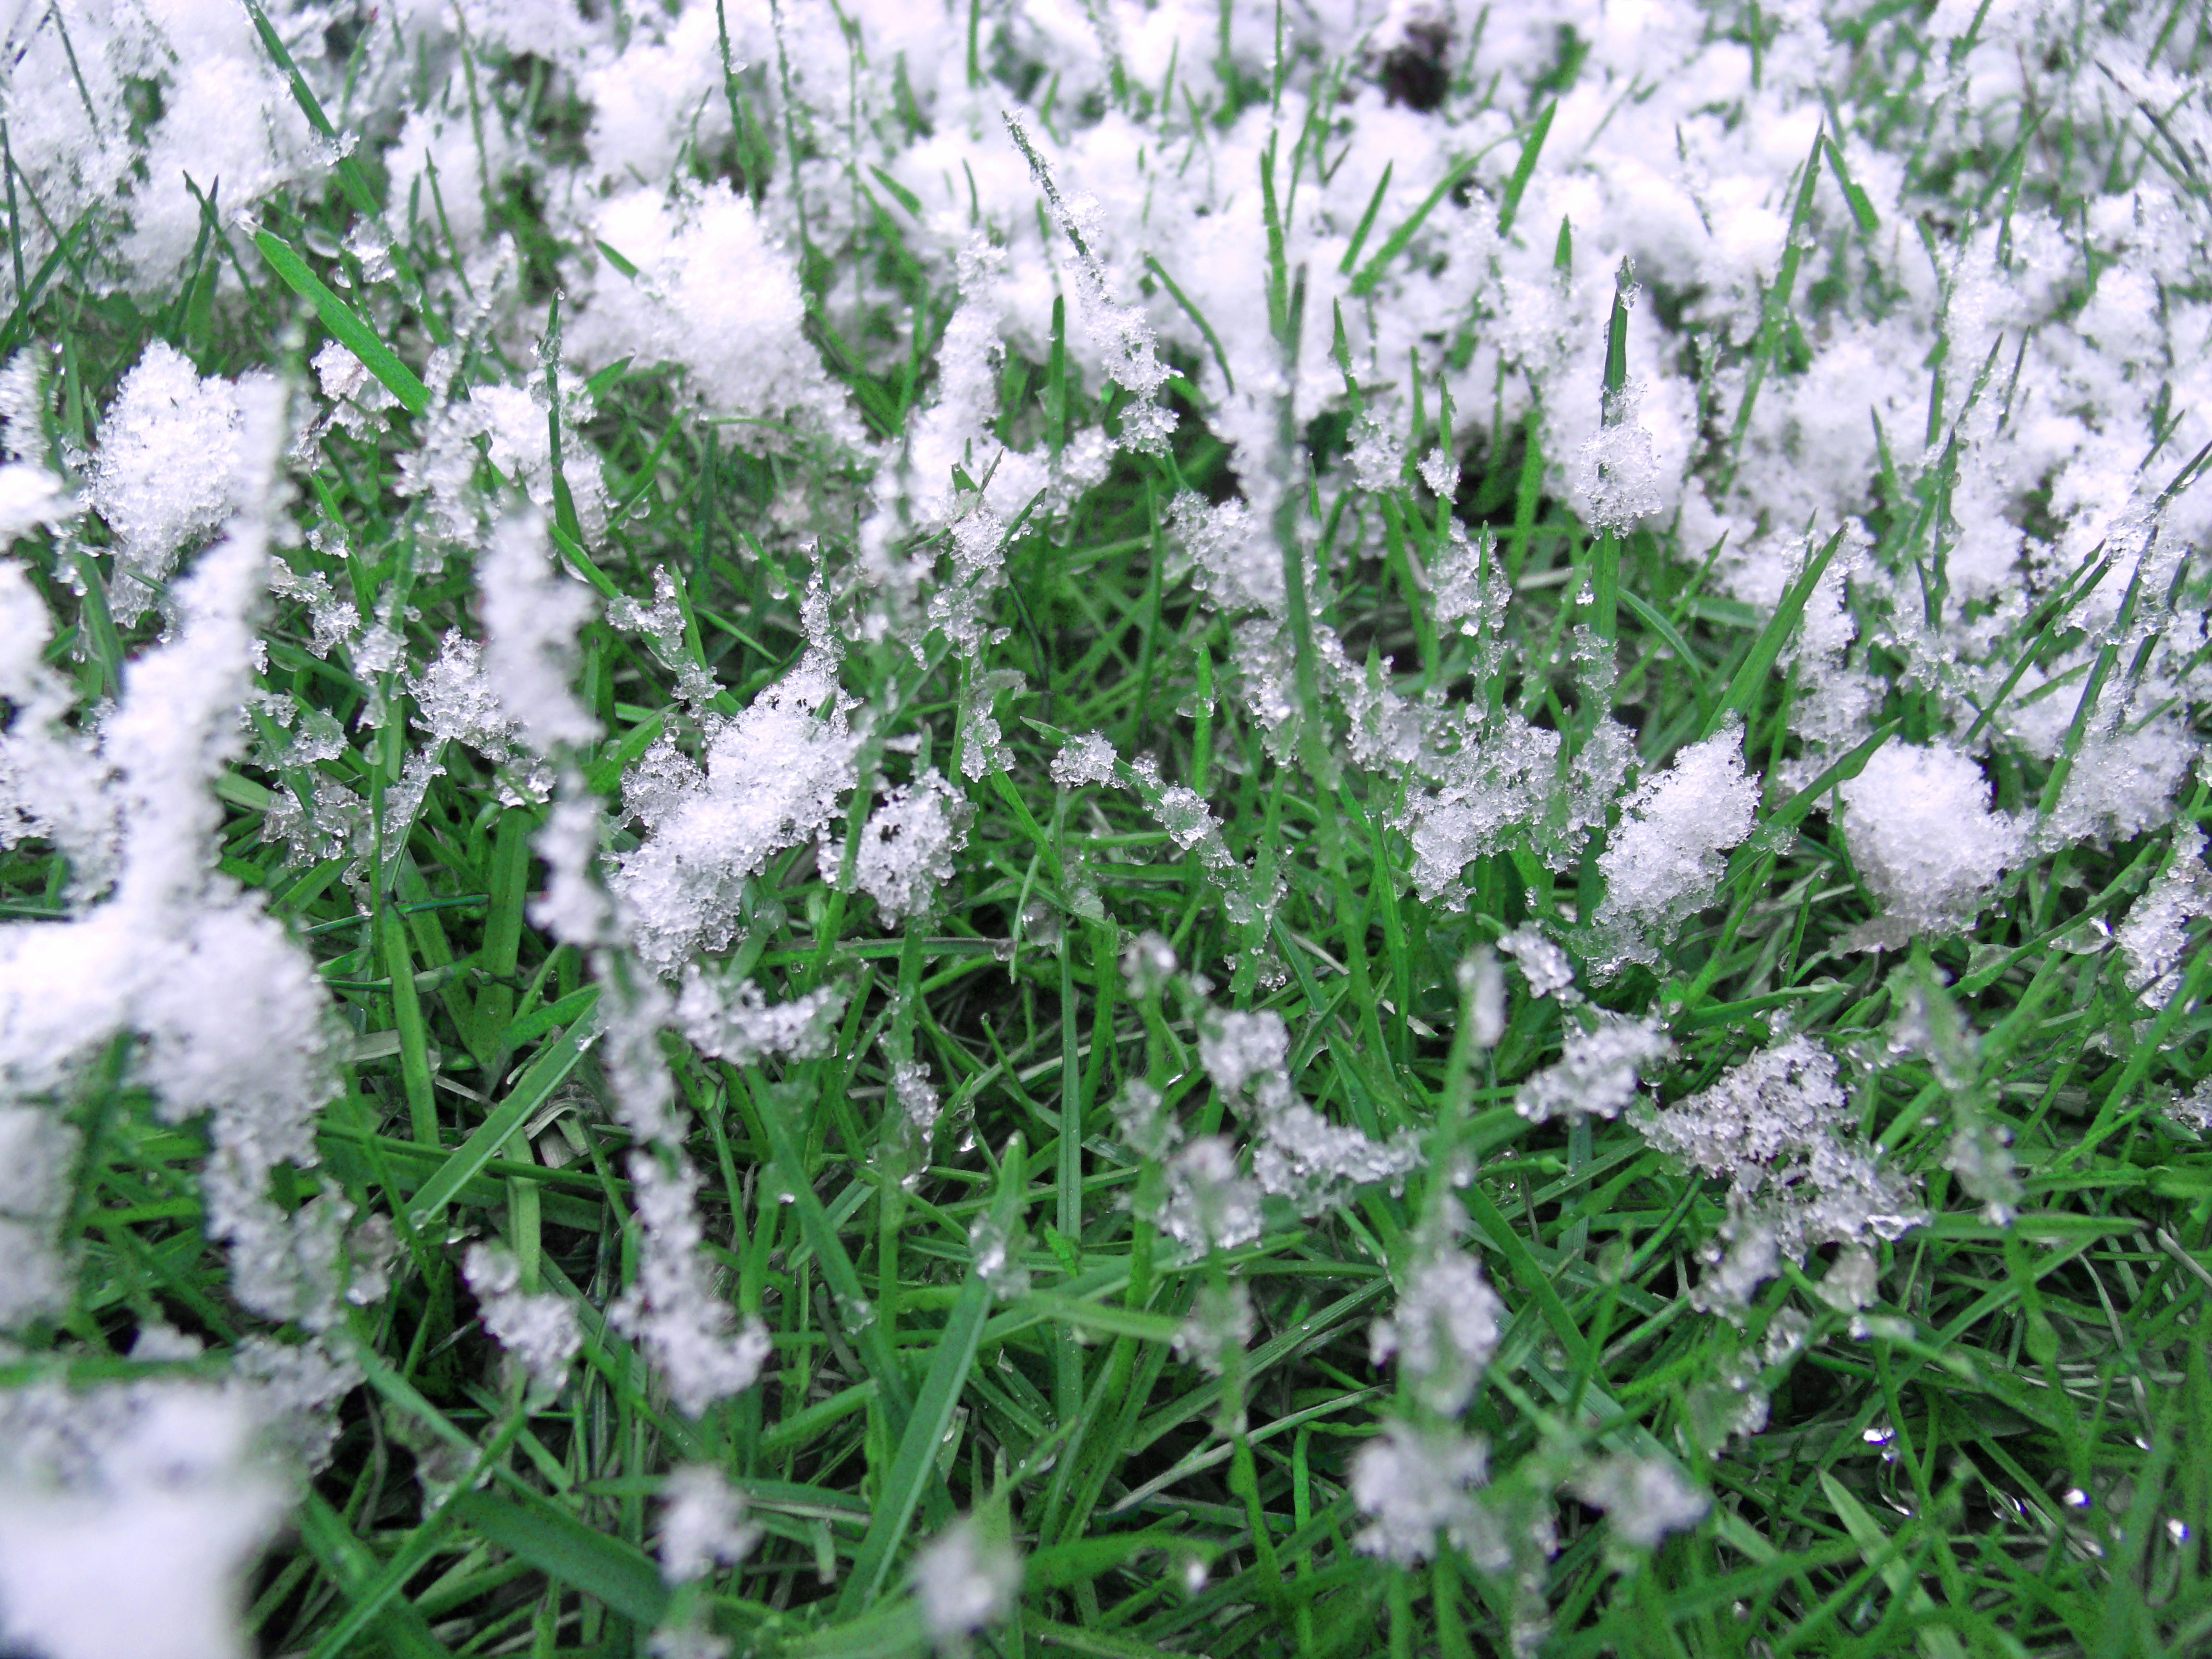 Snowy grass photo